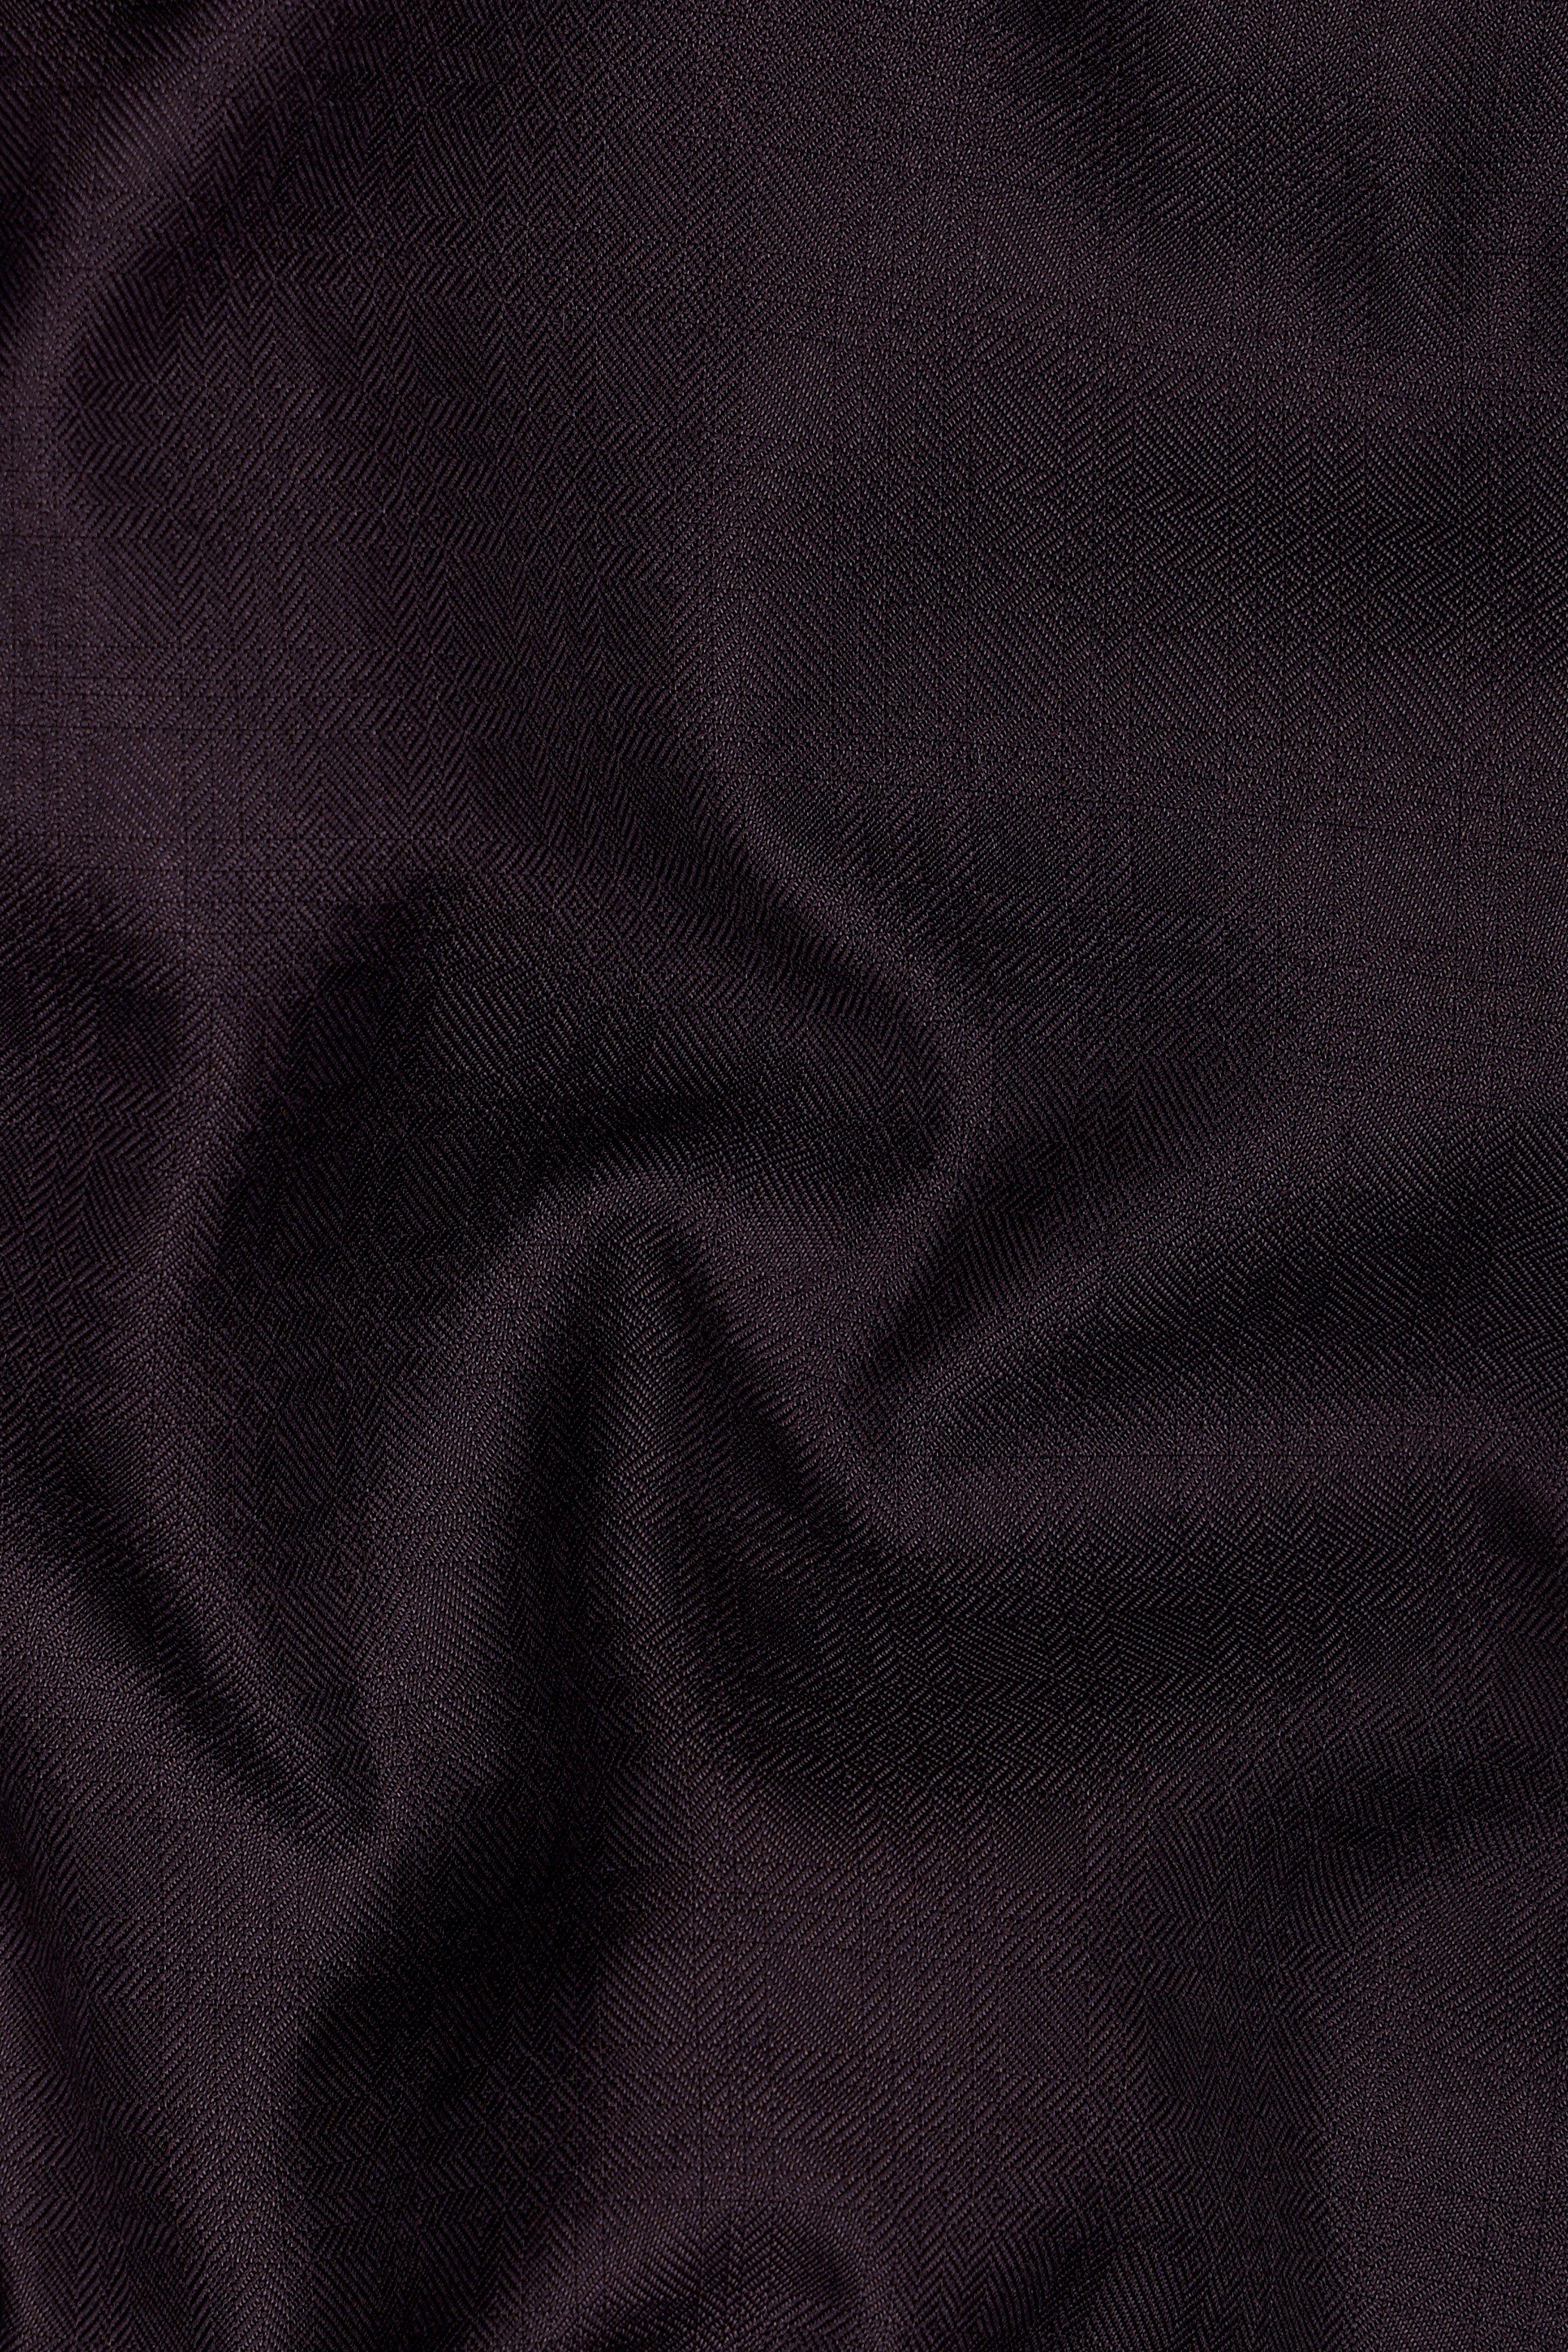 Plum Purple Wool Rich Double Breasted Designer Suit ST2903-DB-D8-36, ST2903-DB-D8-38, ST2903-DB-D8-40, ST2903-DB-D8-42, ST2903-DB-D8-44, ST2903-DB-D8-46, ST2903-DB-D8-48, ST2903-DB-D8-50, ST2903-DB-D8-52, ST2903-DB-D8-54, ST2903-DB-D8-56, ST2903-DB-D8-58, ST2903-DB-D8-60